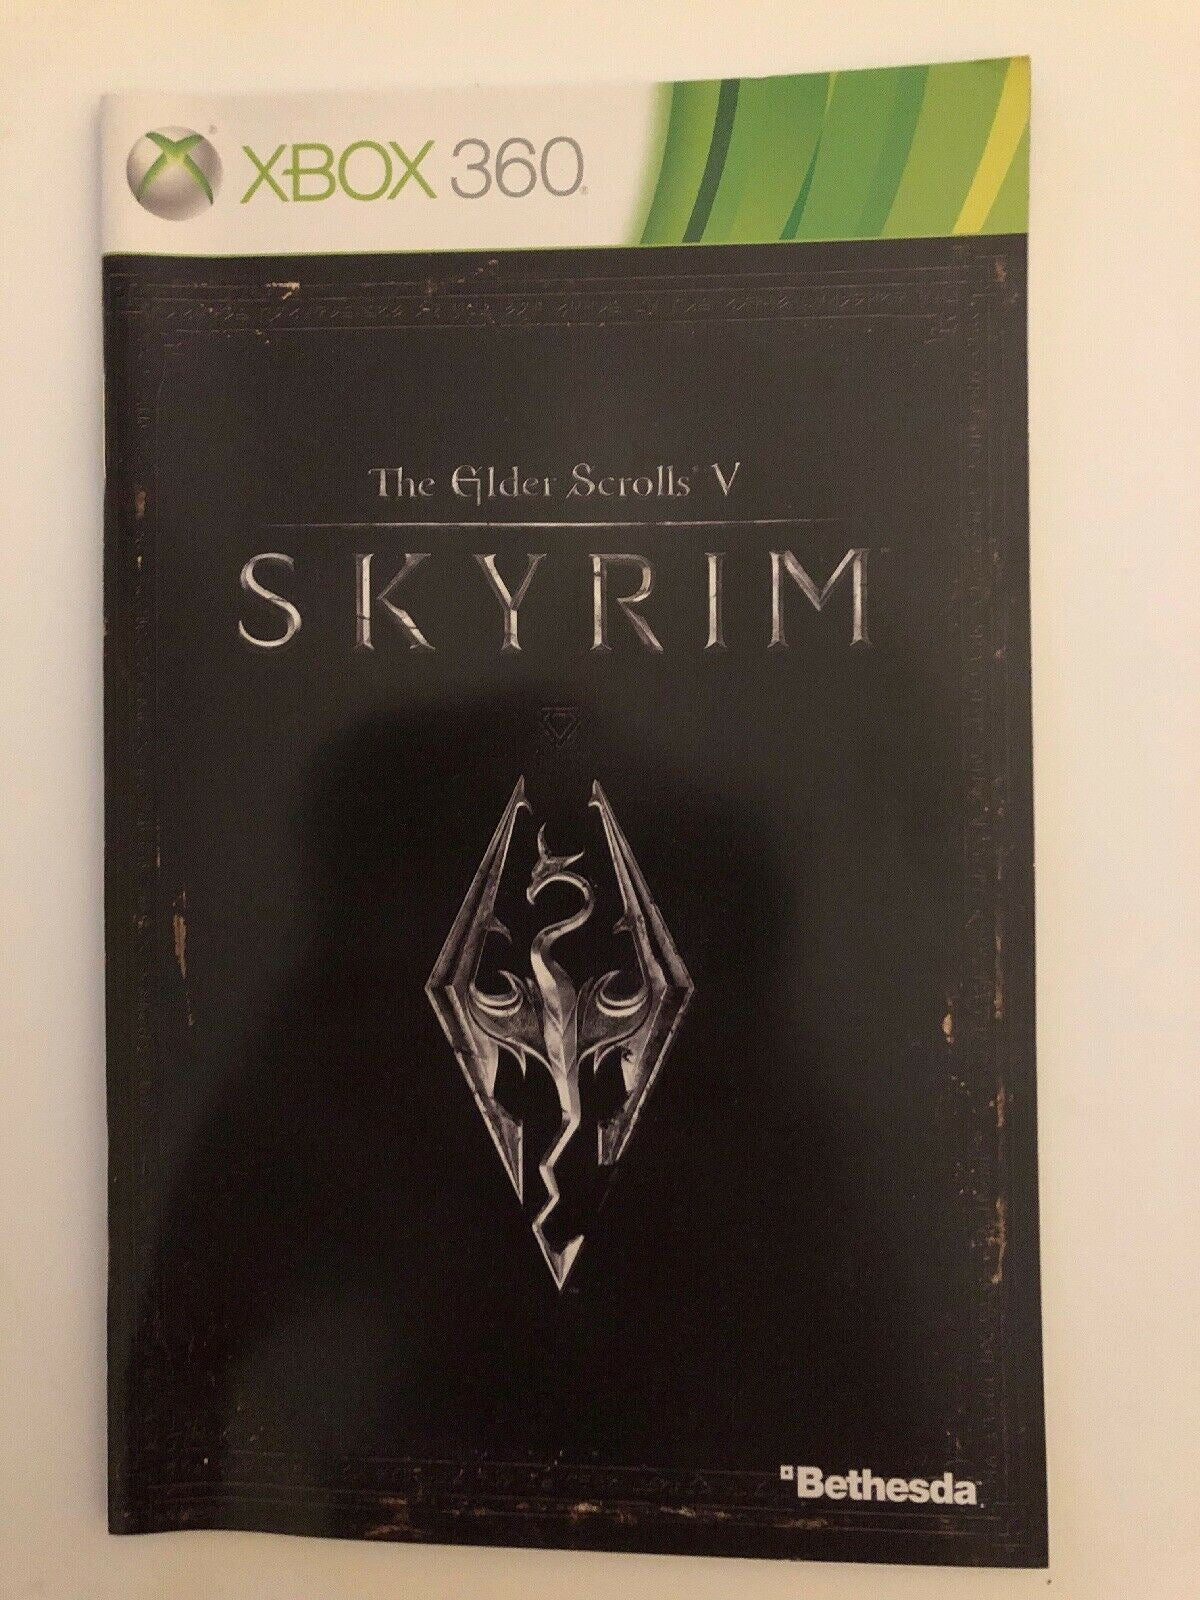 The Elder Scrolls V - Skyrim (Microsoft Xbox 360, 2011) PAL with Manual